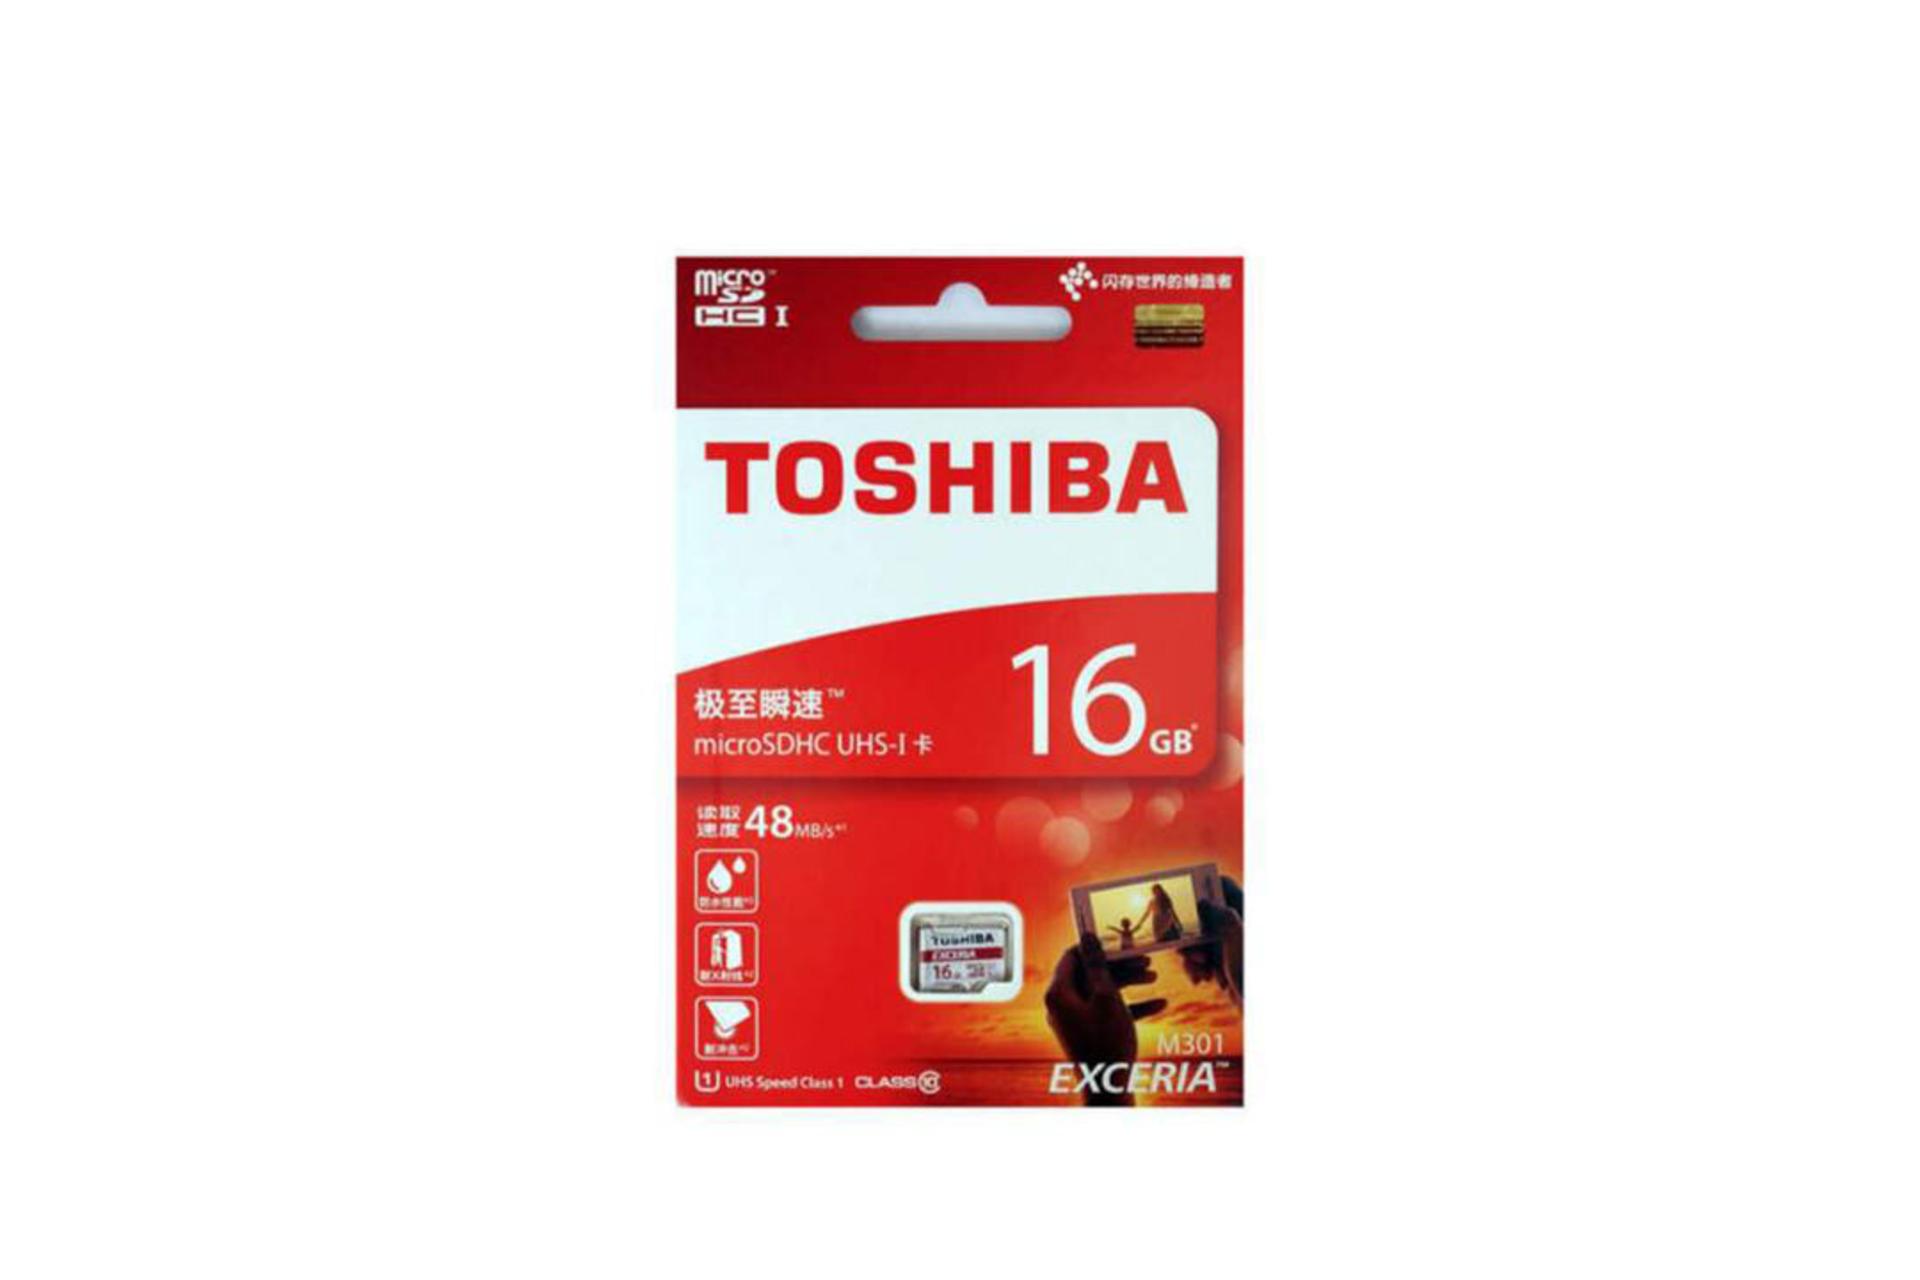 Toshiba M301 microSDHC Class 10 UHS-I U1 16GB